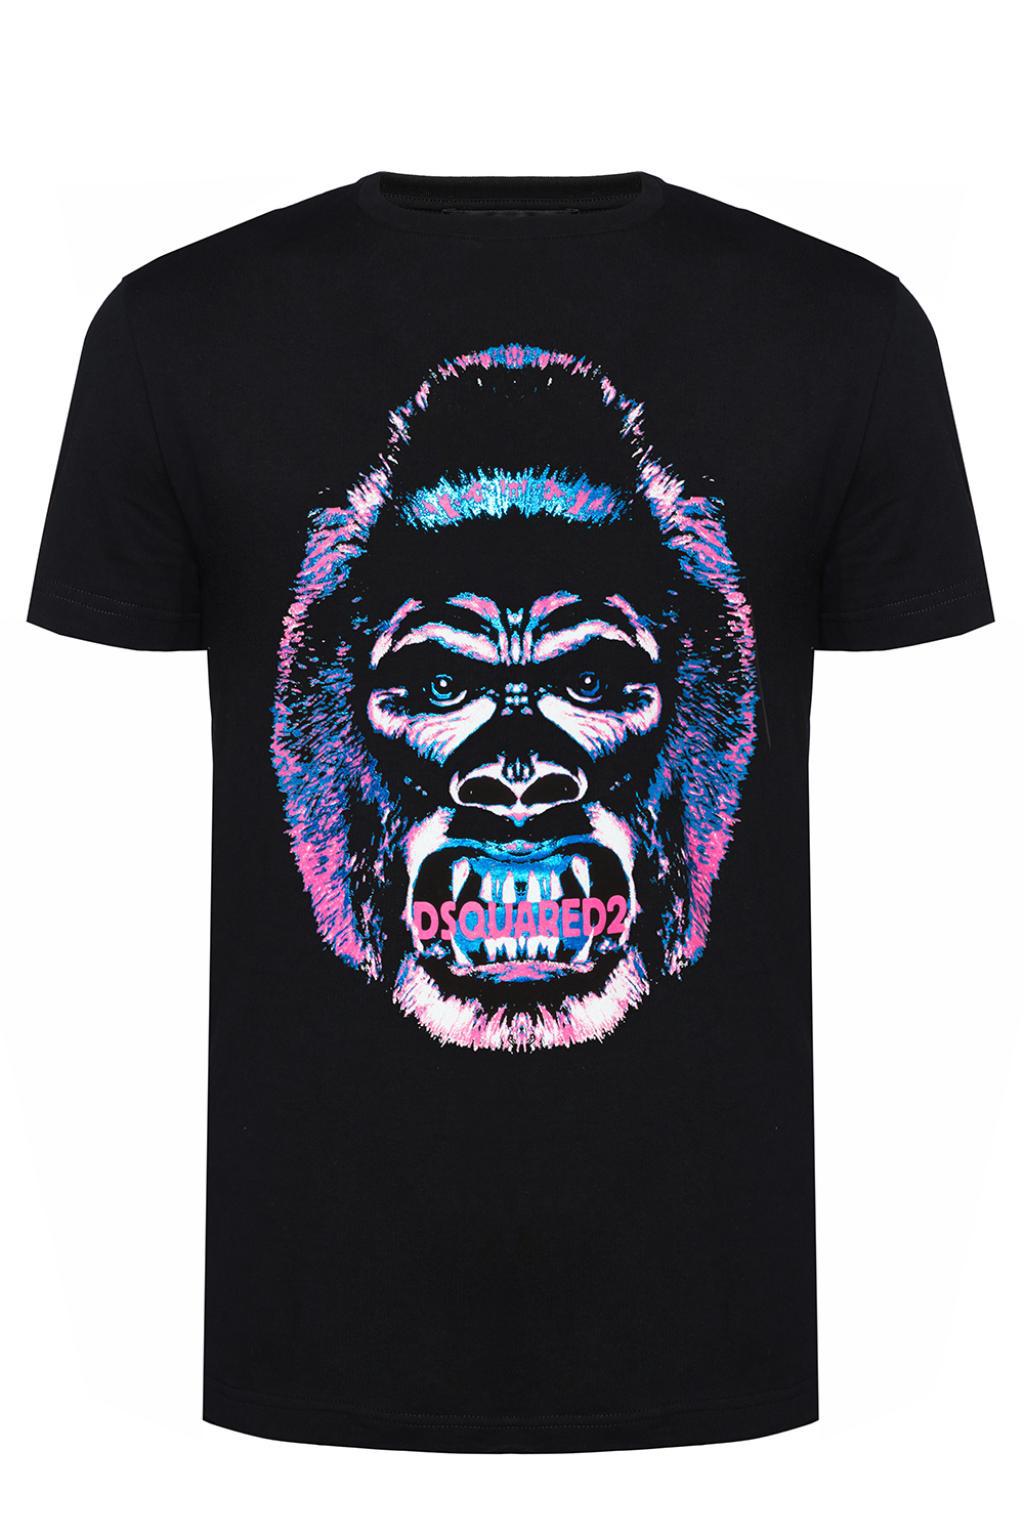 DSquared² Cotton Gorilla Head T-shirt in Black for Men - Lyst